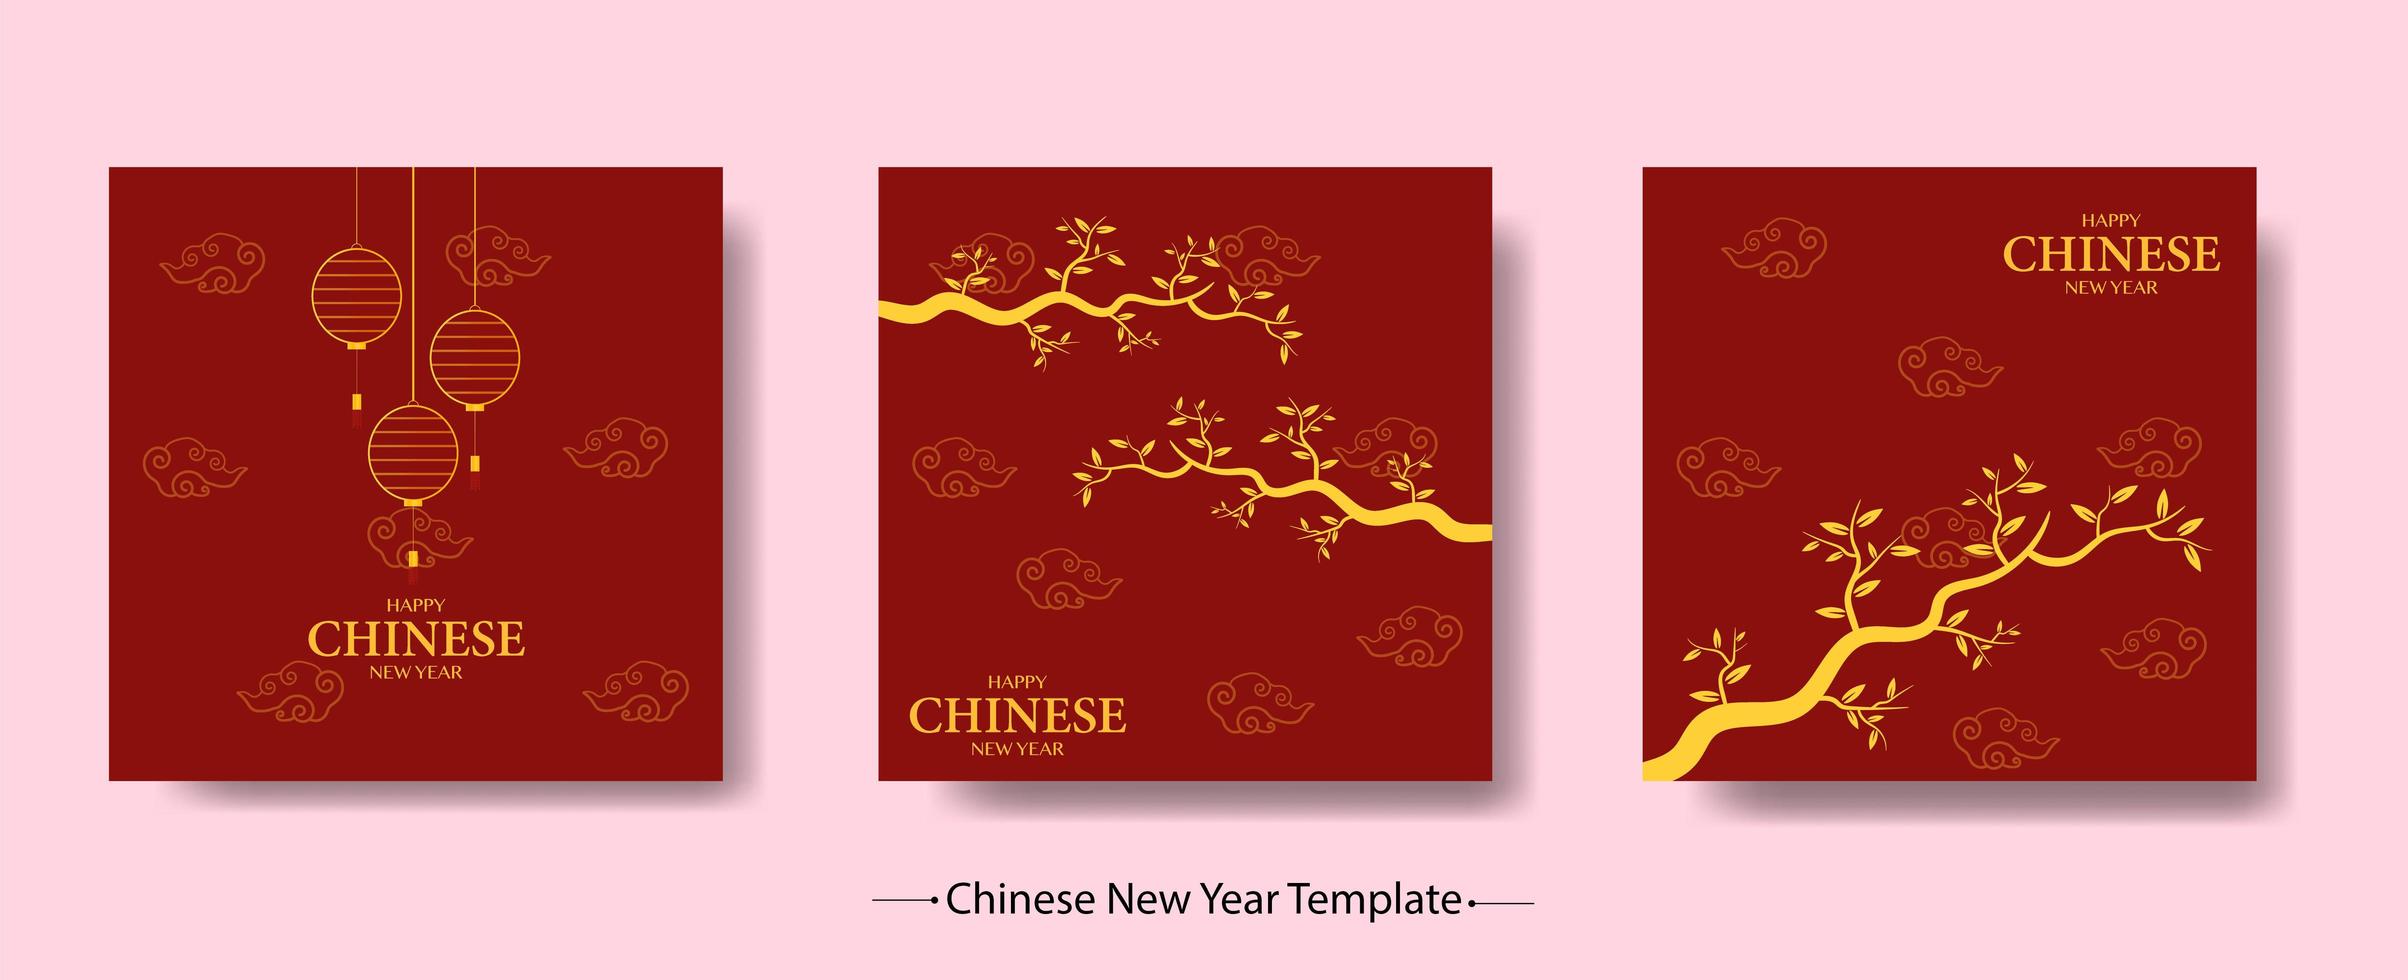 Happy Chinese New Year Template Bundle vektor